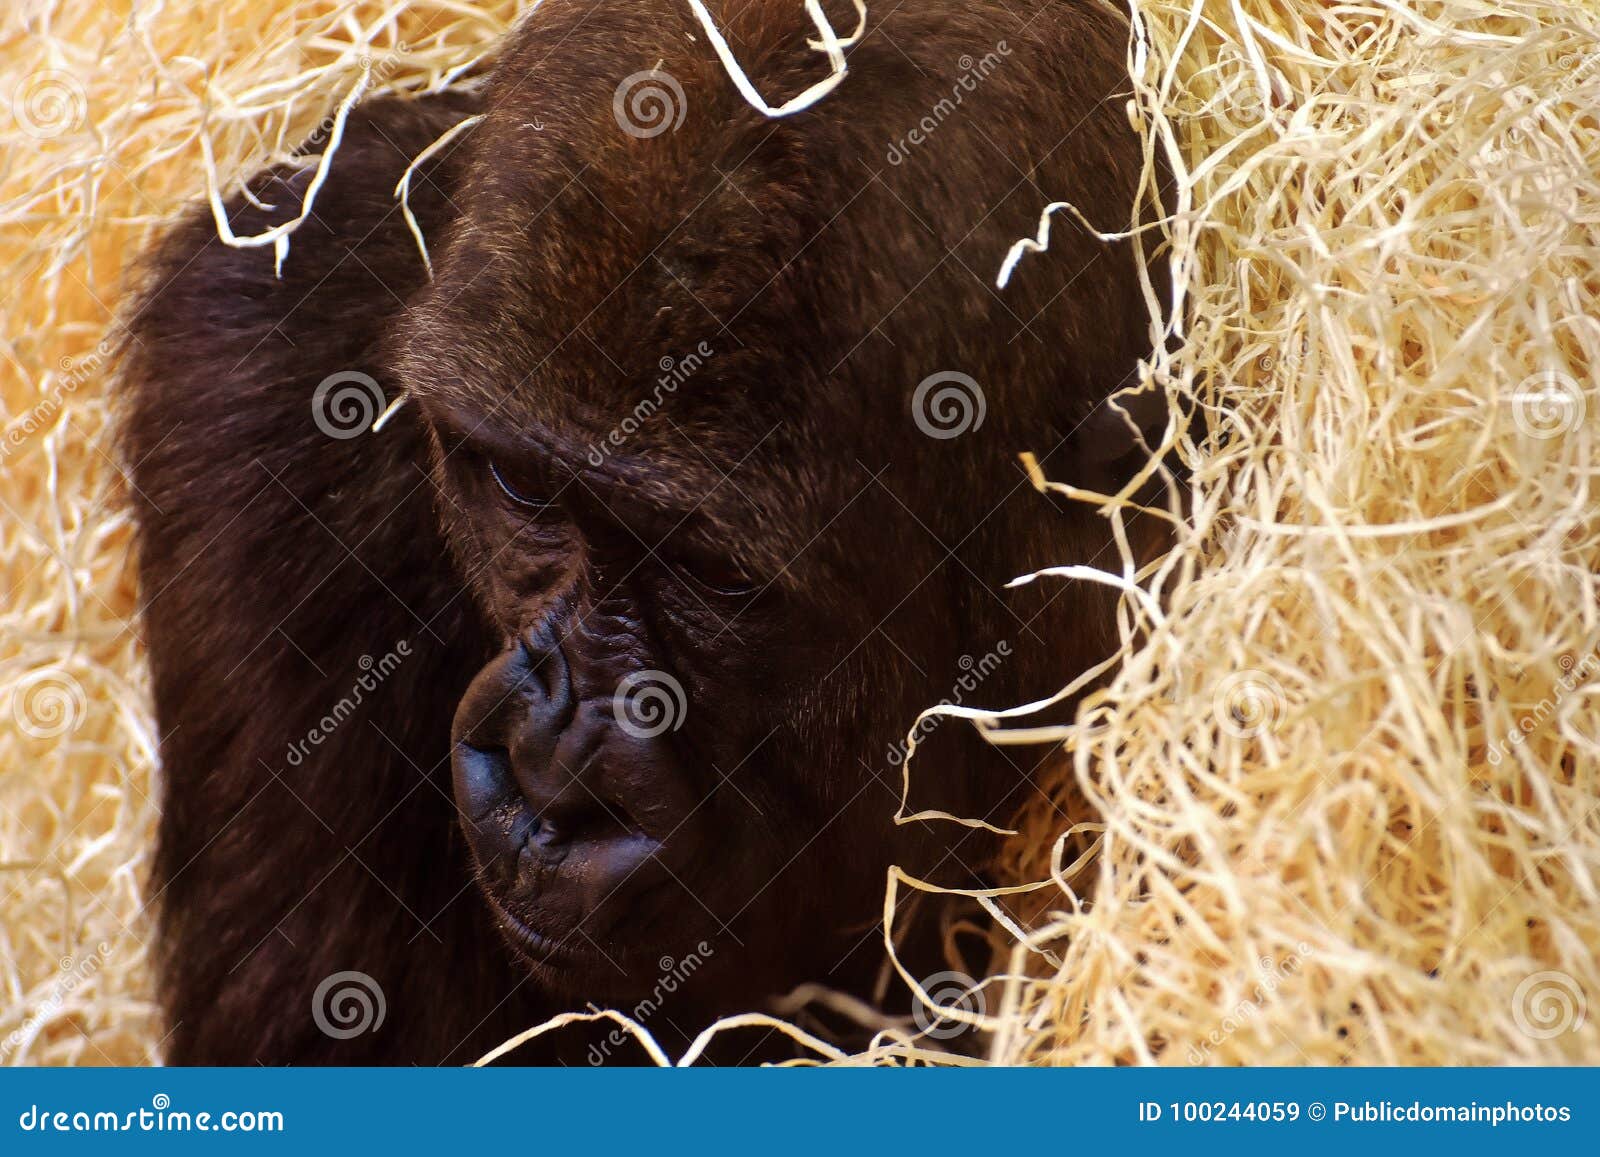 Download Great Ape, Mammal, Orangutan, Primate Picture. Image: 100244059